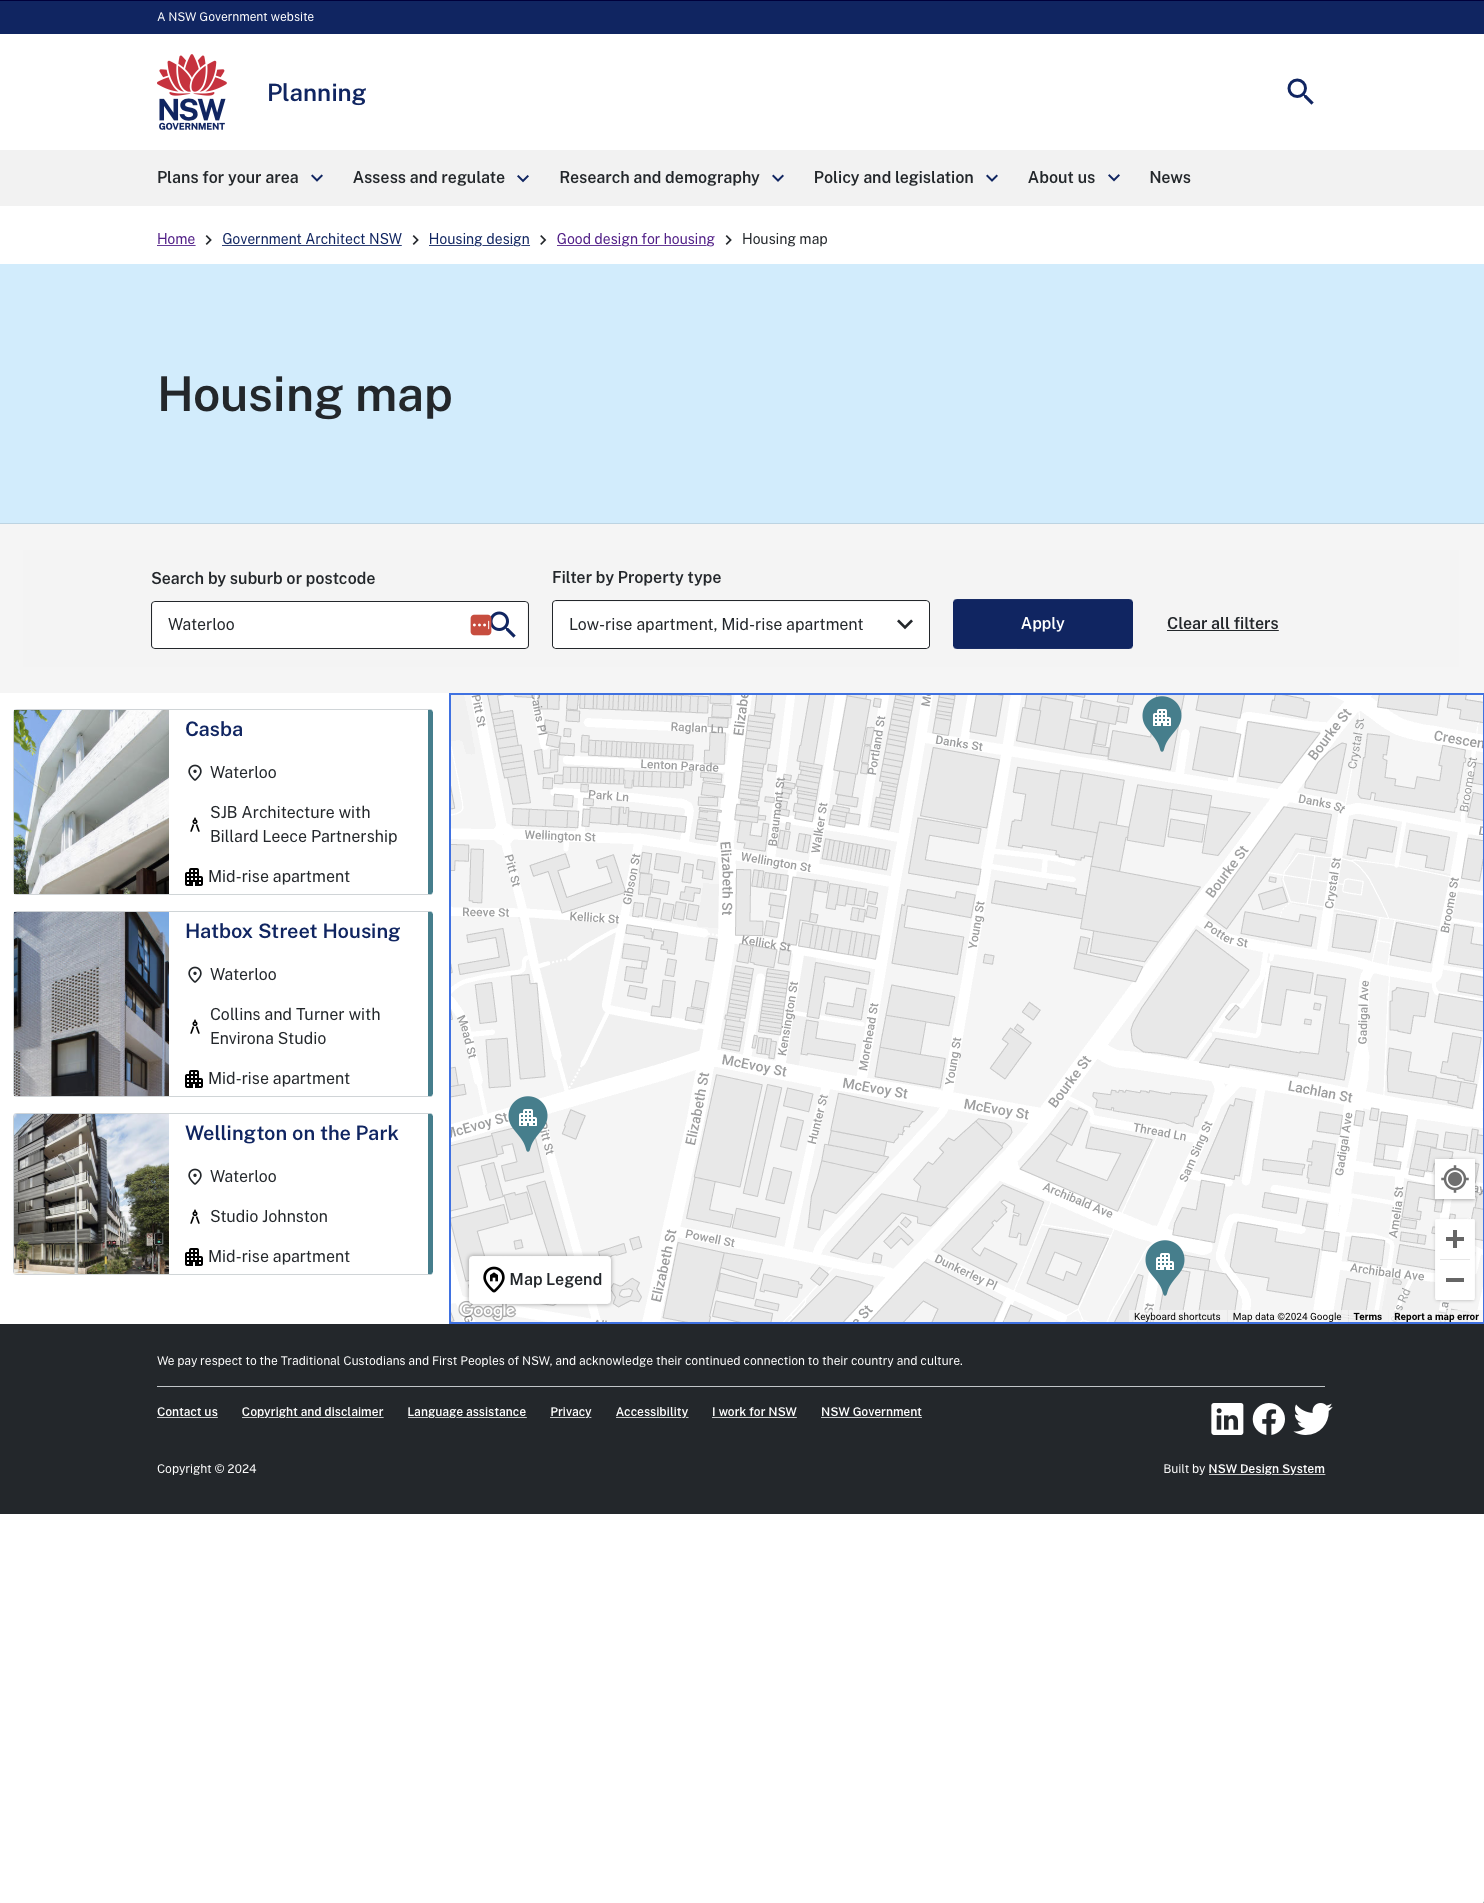 GANSW Good Design for Housing map